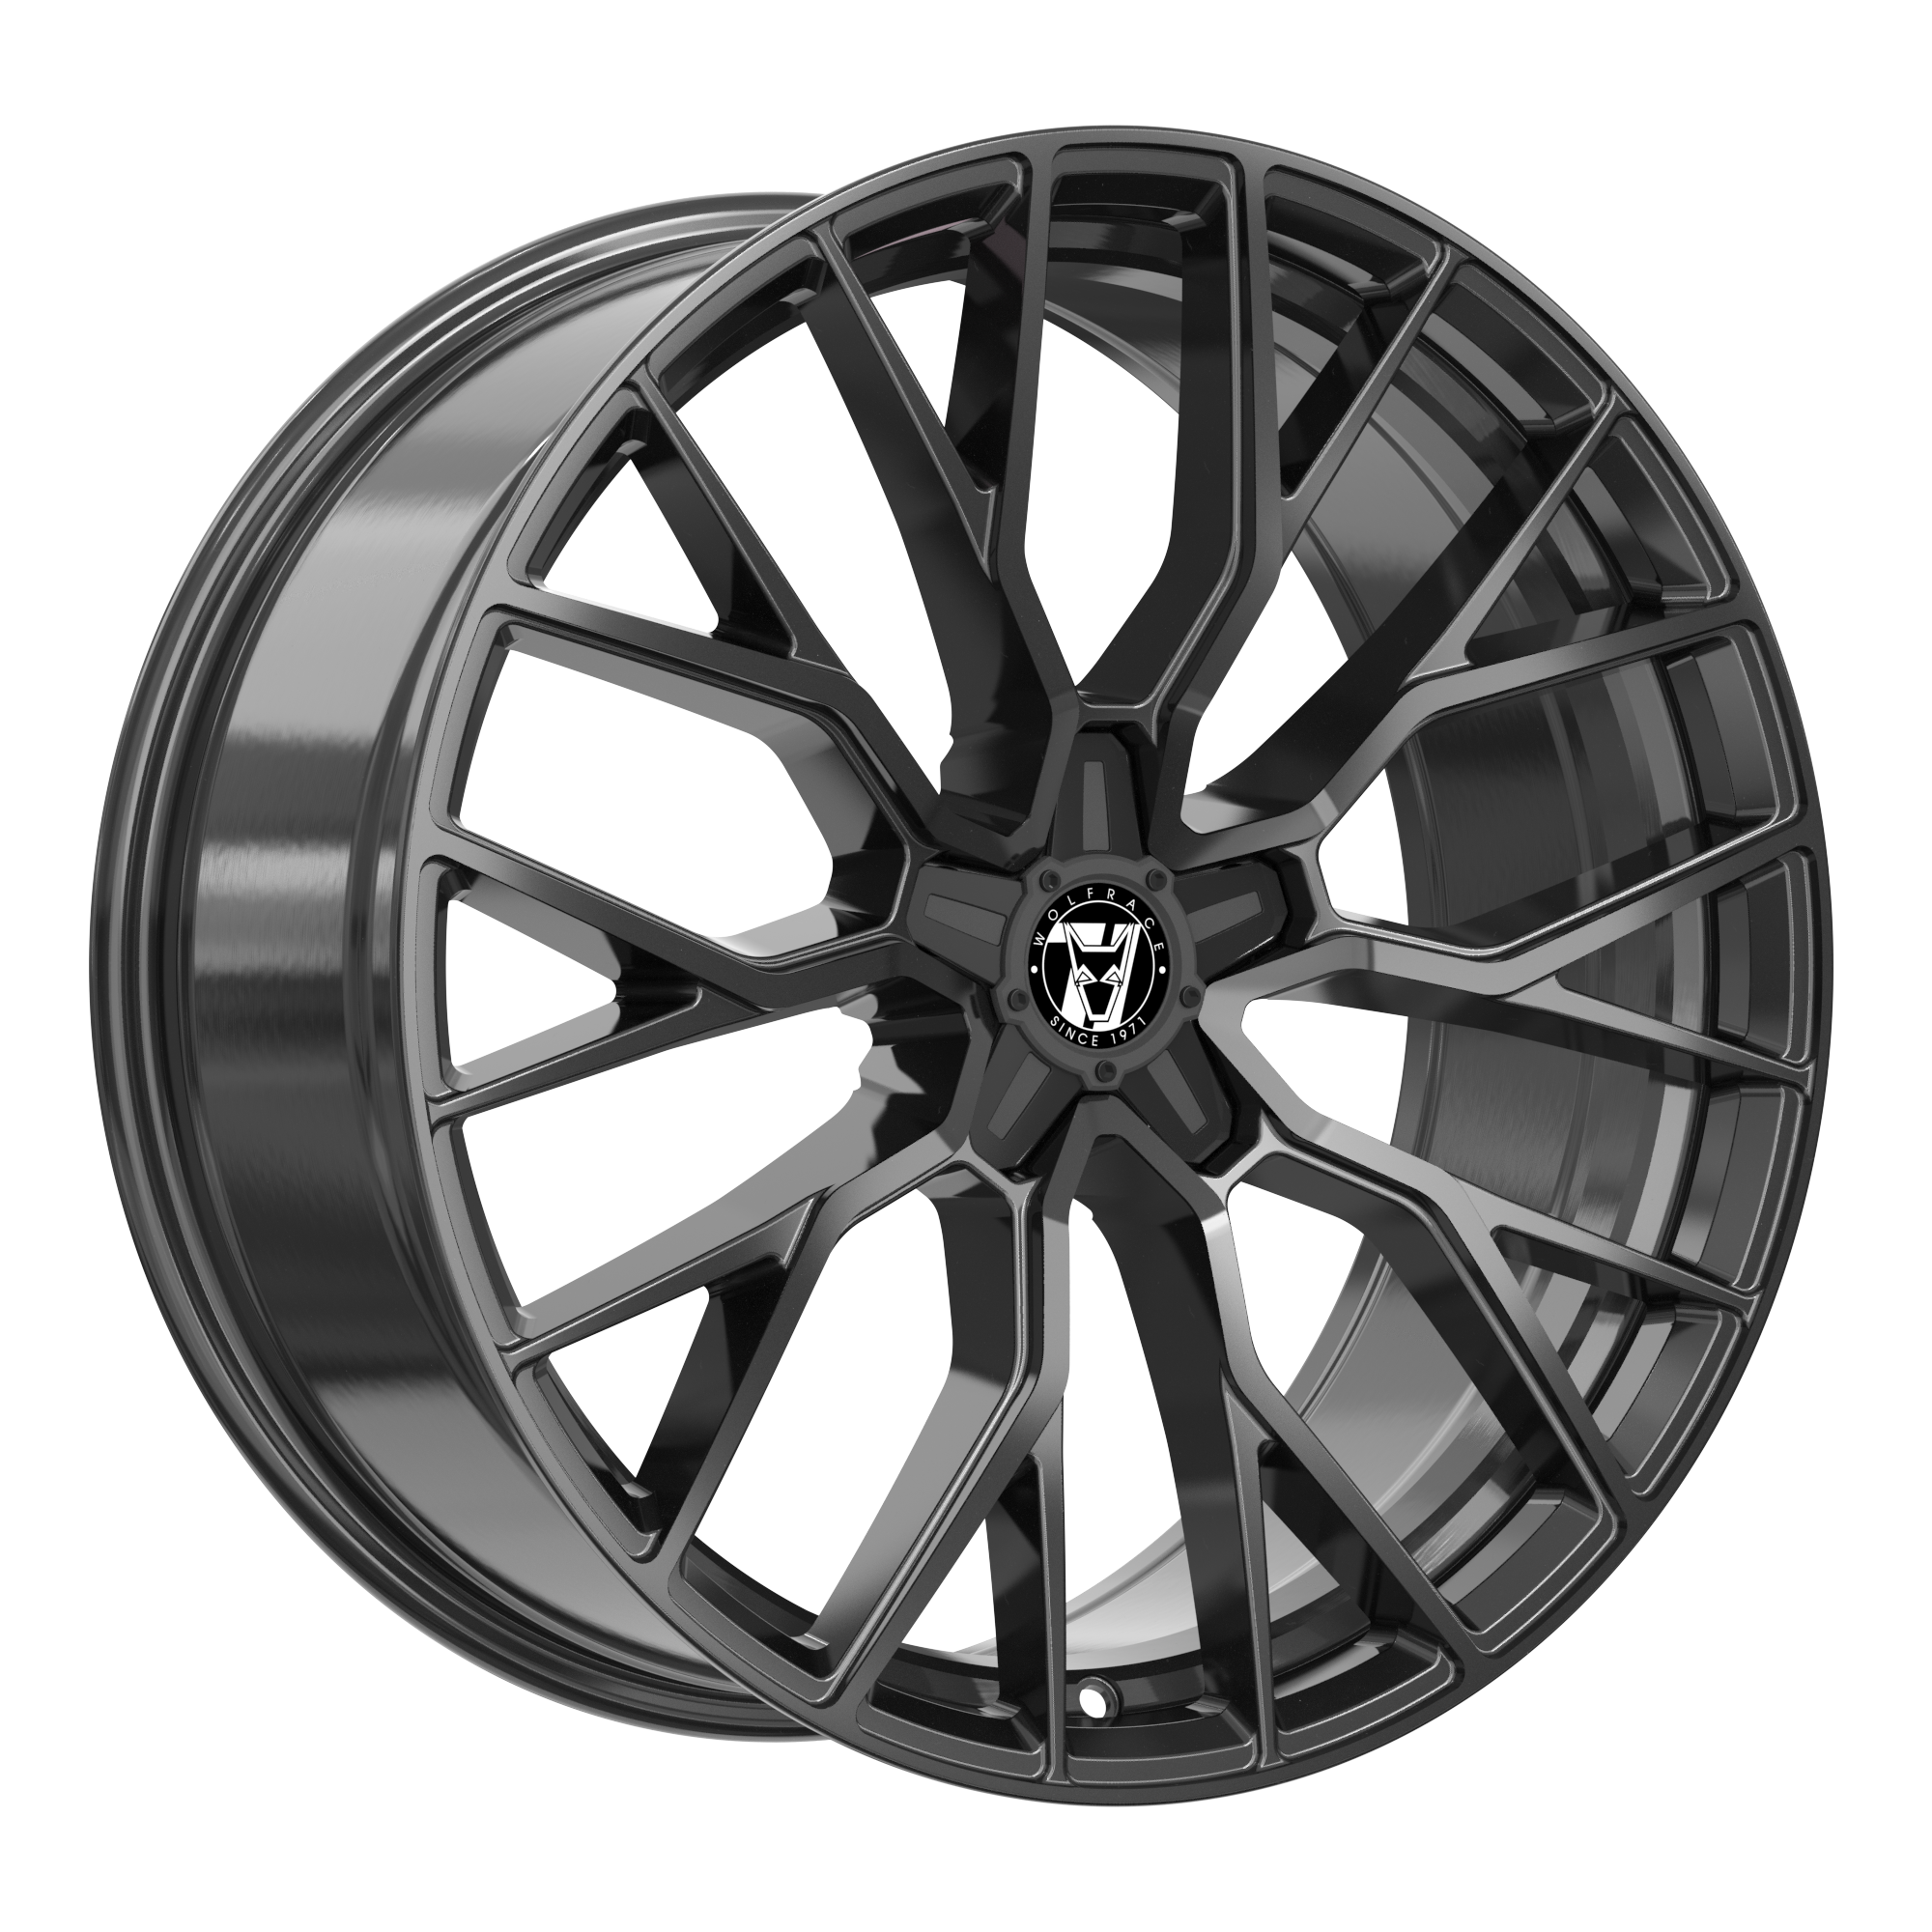 Demon Wheels 71 Munich GTR Black Edition [9.5x22] -5x112- ET 40